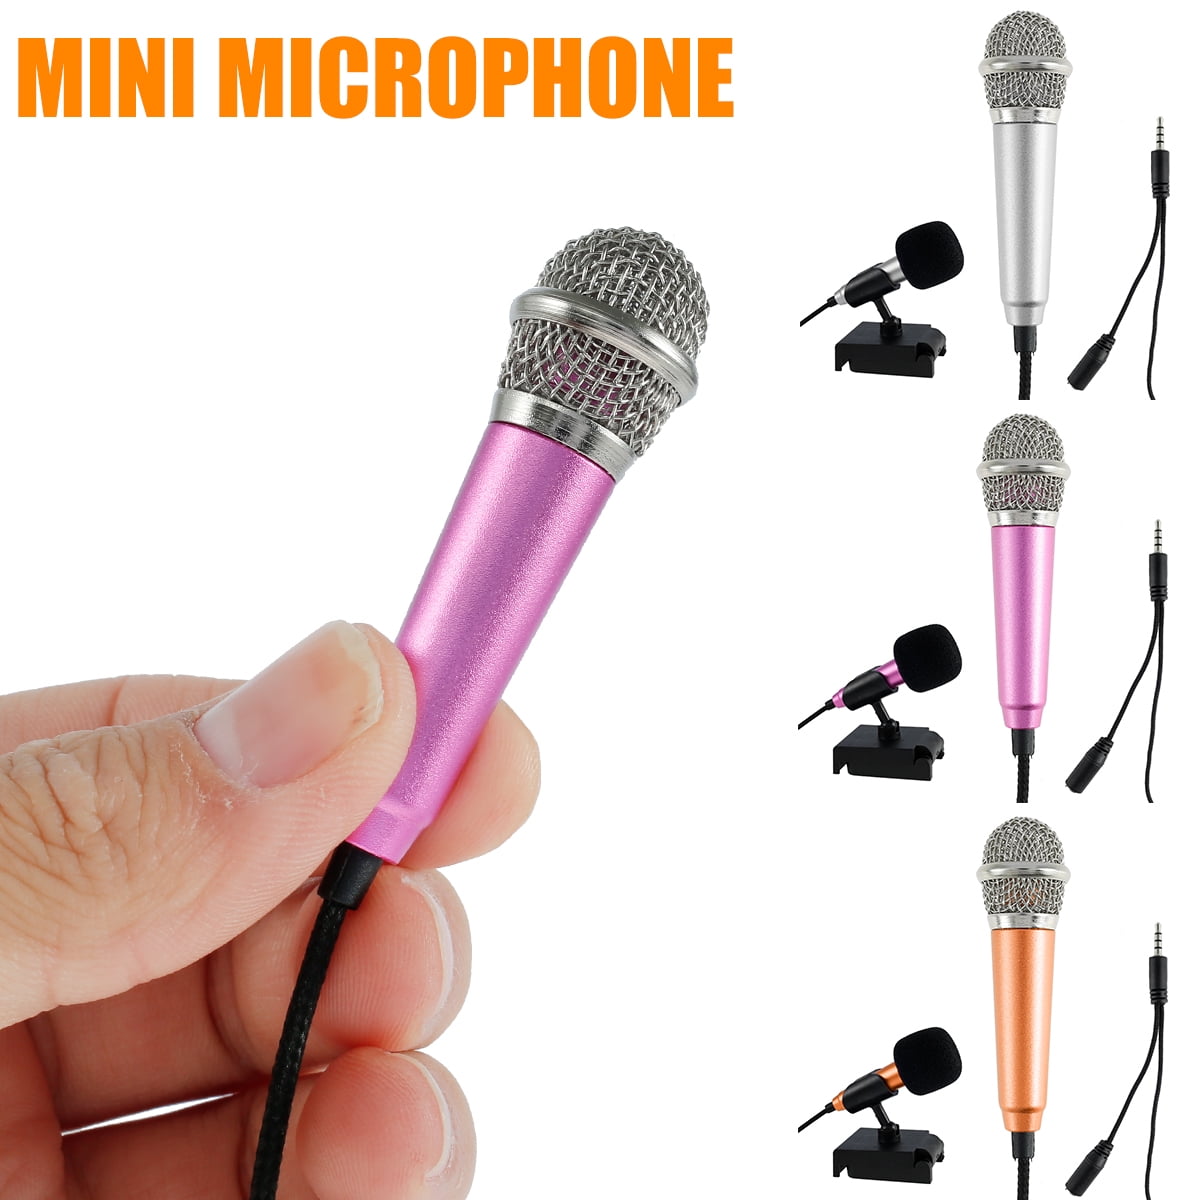 Mini Karaoke Microphone Mini Microphone Mini Voice Recording Microphone Portable Karaoke Mic for Singing Recording Voice Recording